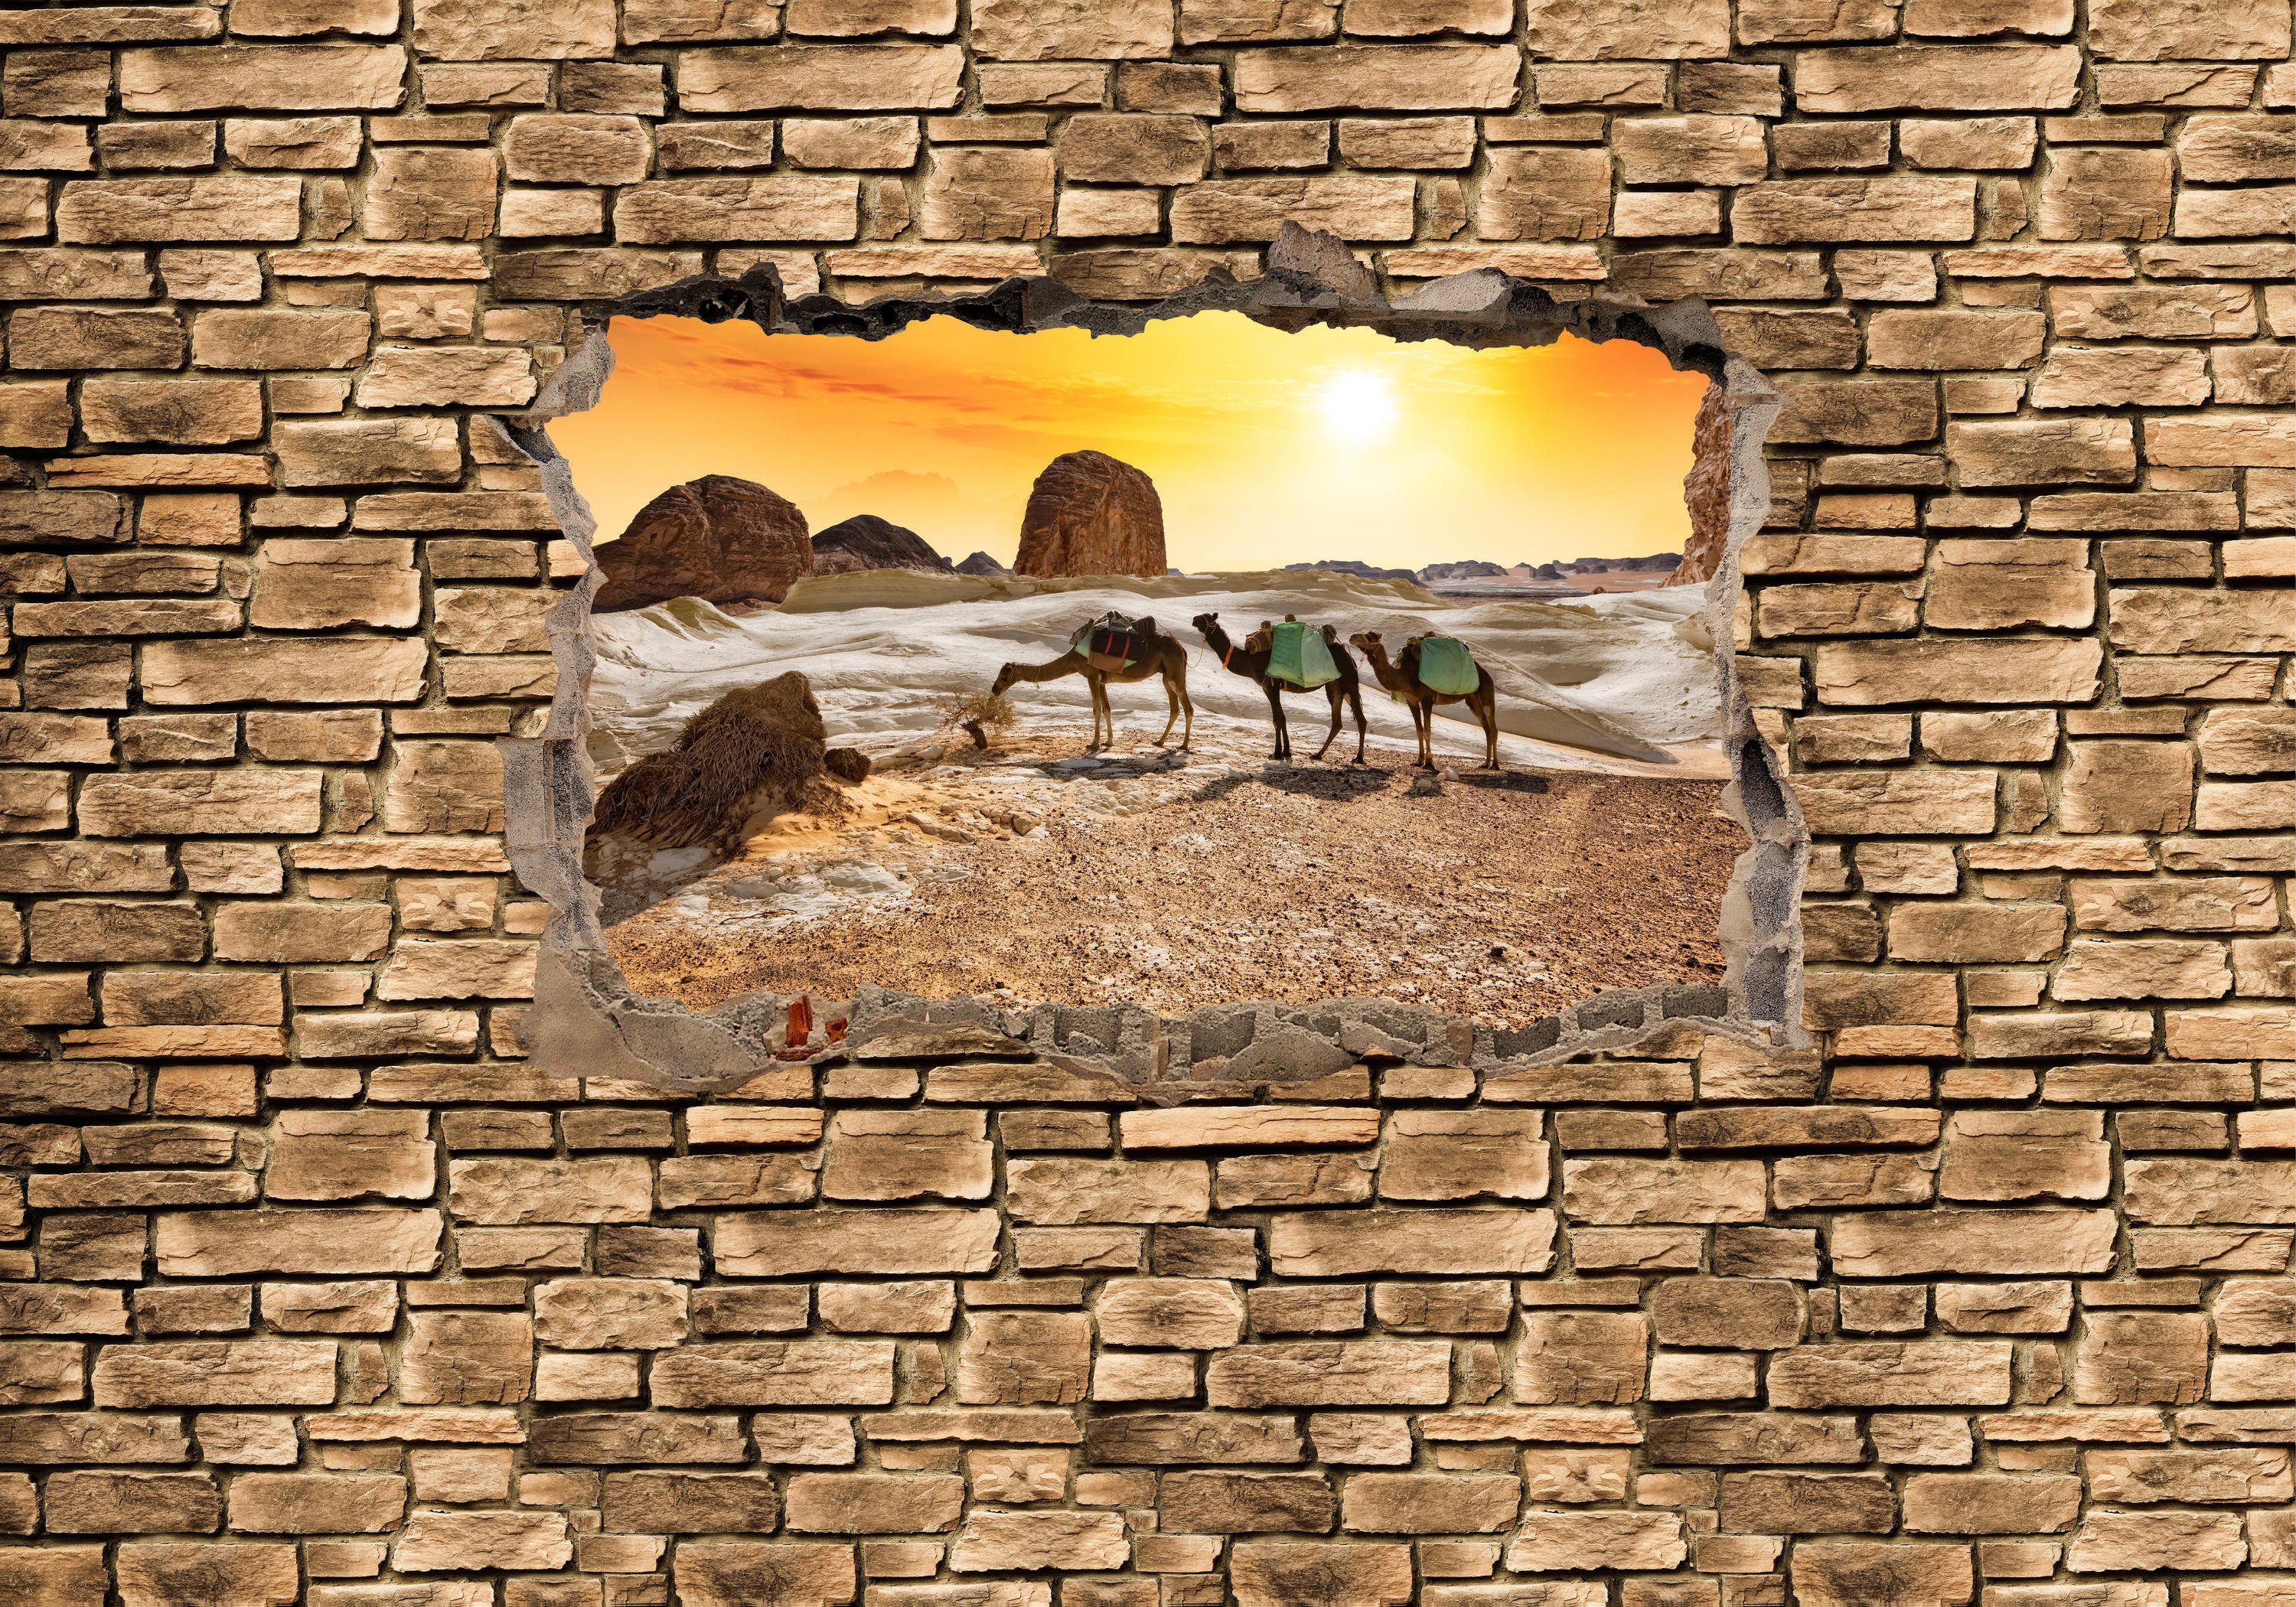 wandmotiv24 Fototapete 3D Kamele in der Wüste - Steinmauer, glatt, Wandtapete, Motivtapete, matt, Vliestapete